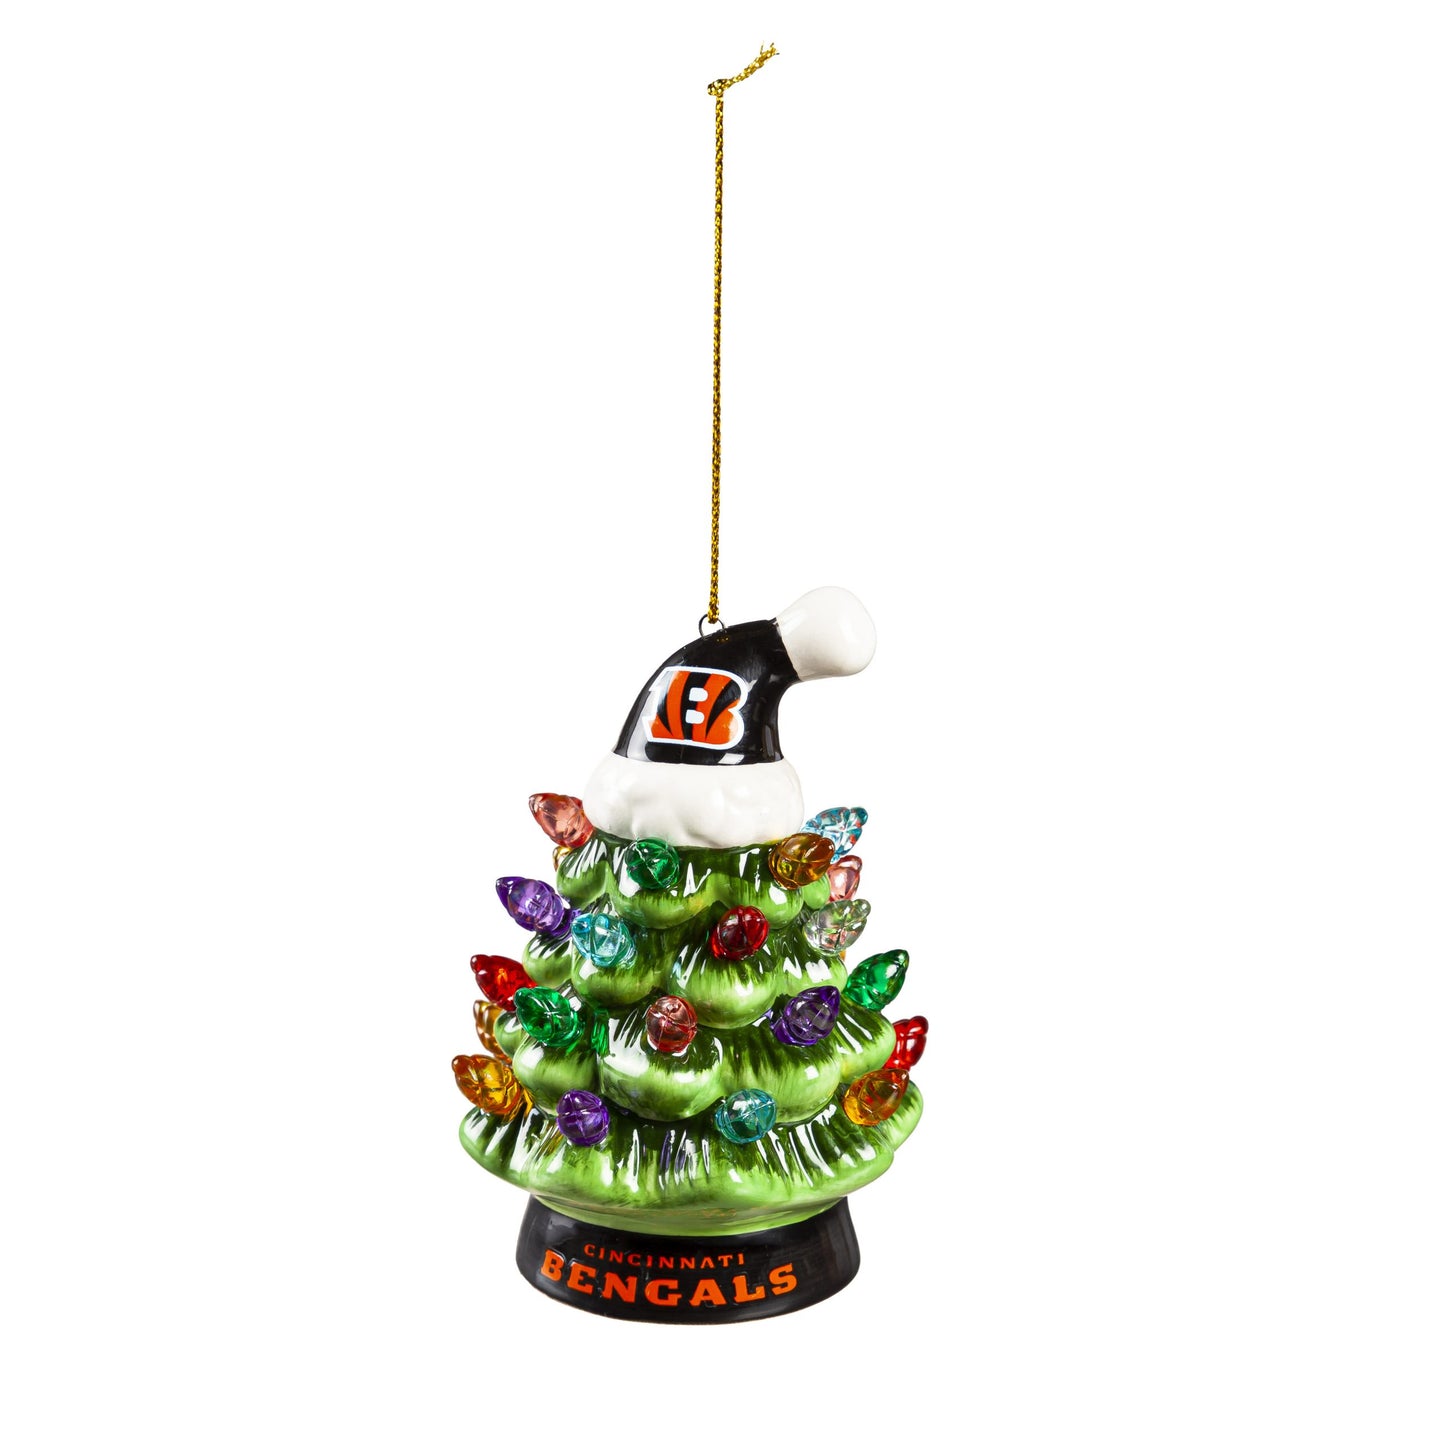 Bengals LED Christmas Tree Ornament w/ Santa Hat